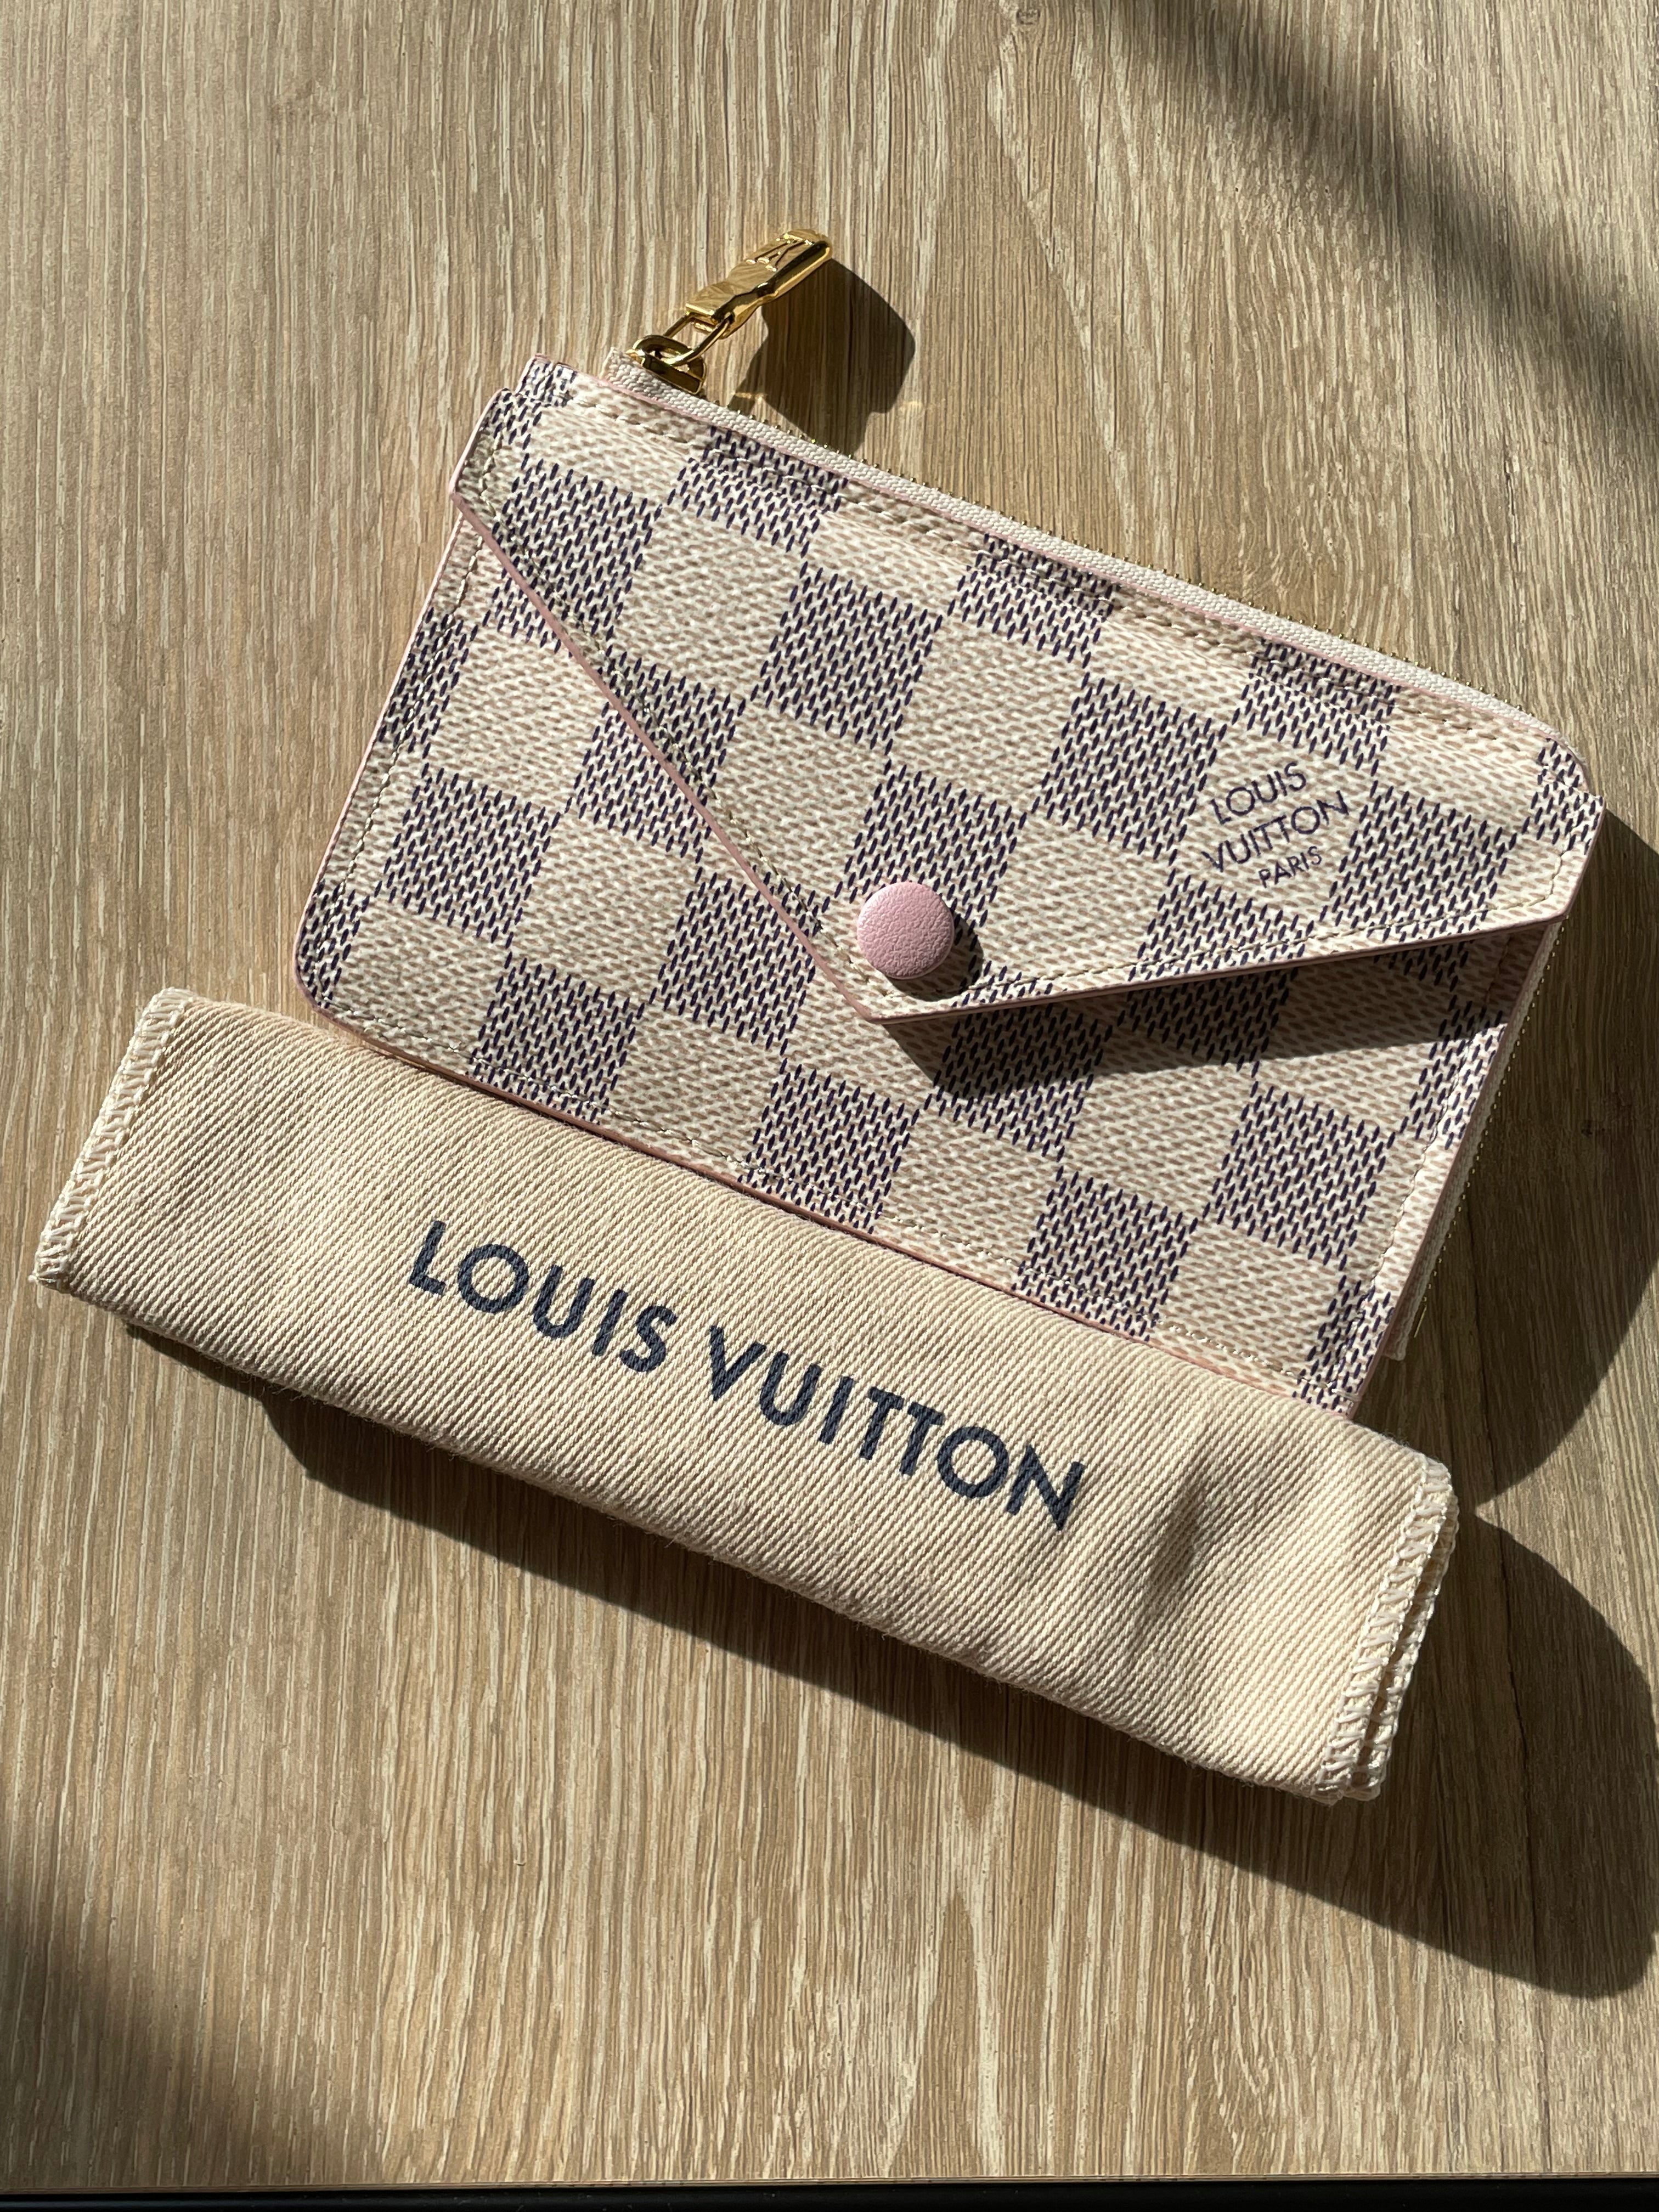 Louis Vuitton - Victorine Wallet Review - Damier Ebene Print! 